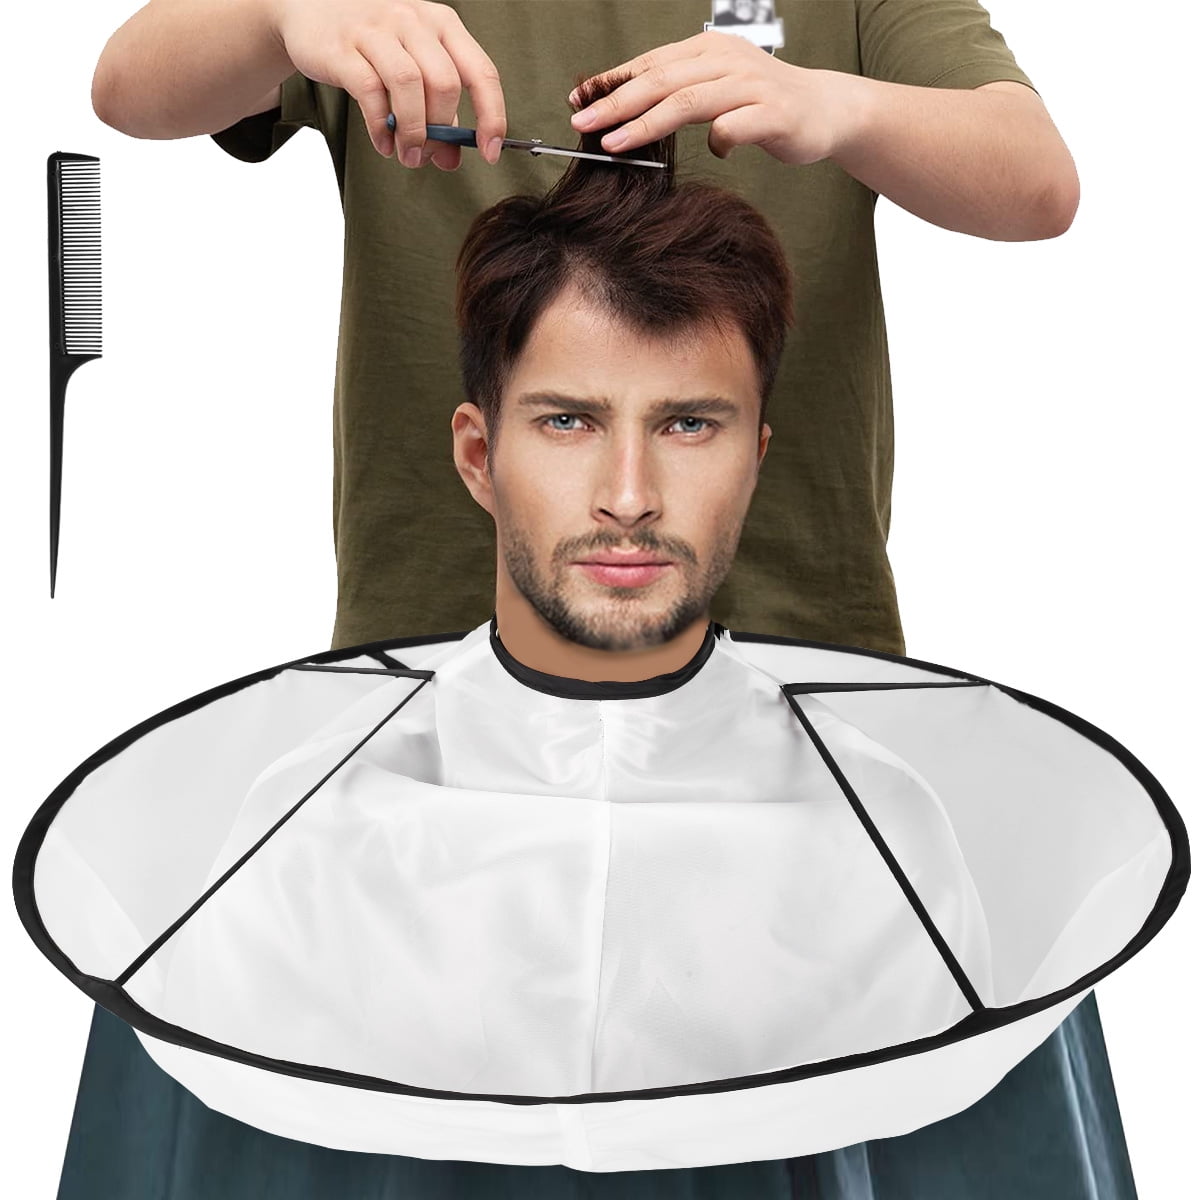 Tnjskce Hair Cutting Cape Foldable Hair Cutting Cloak Hairdressing Umbrella  Cape Waterproof Adults DIY Haircutting Cloak w/ Adjustable Collar for  Barber Salon Home Cape Apron 